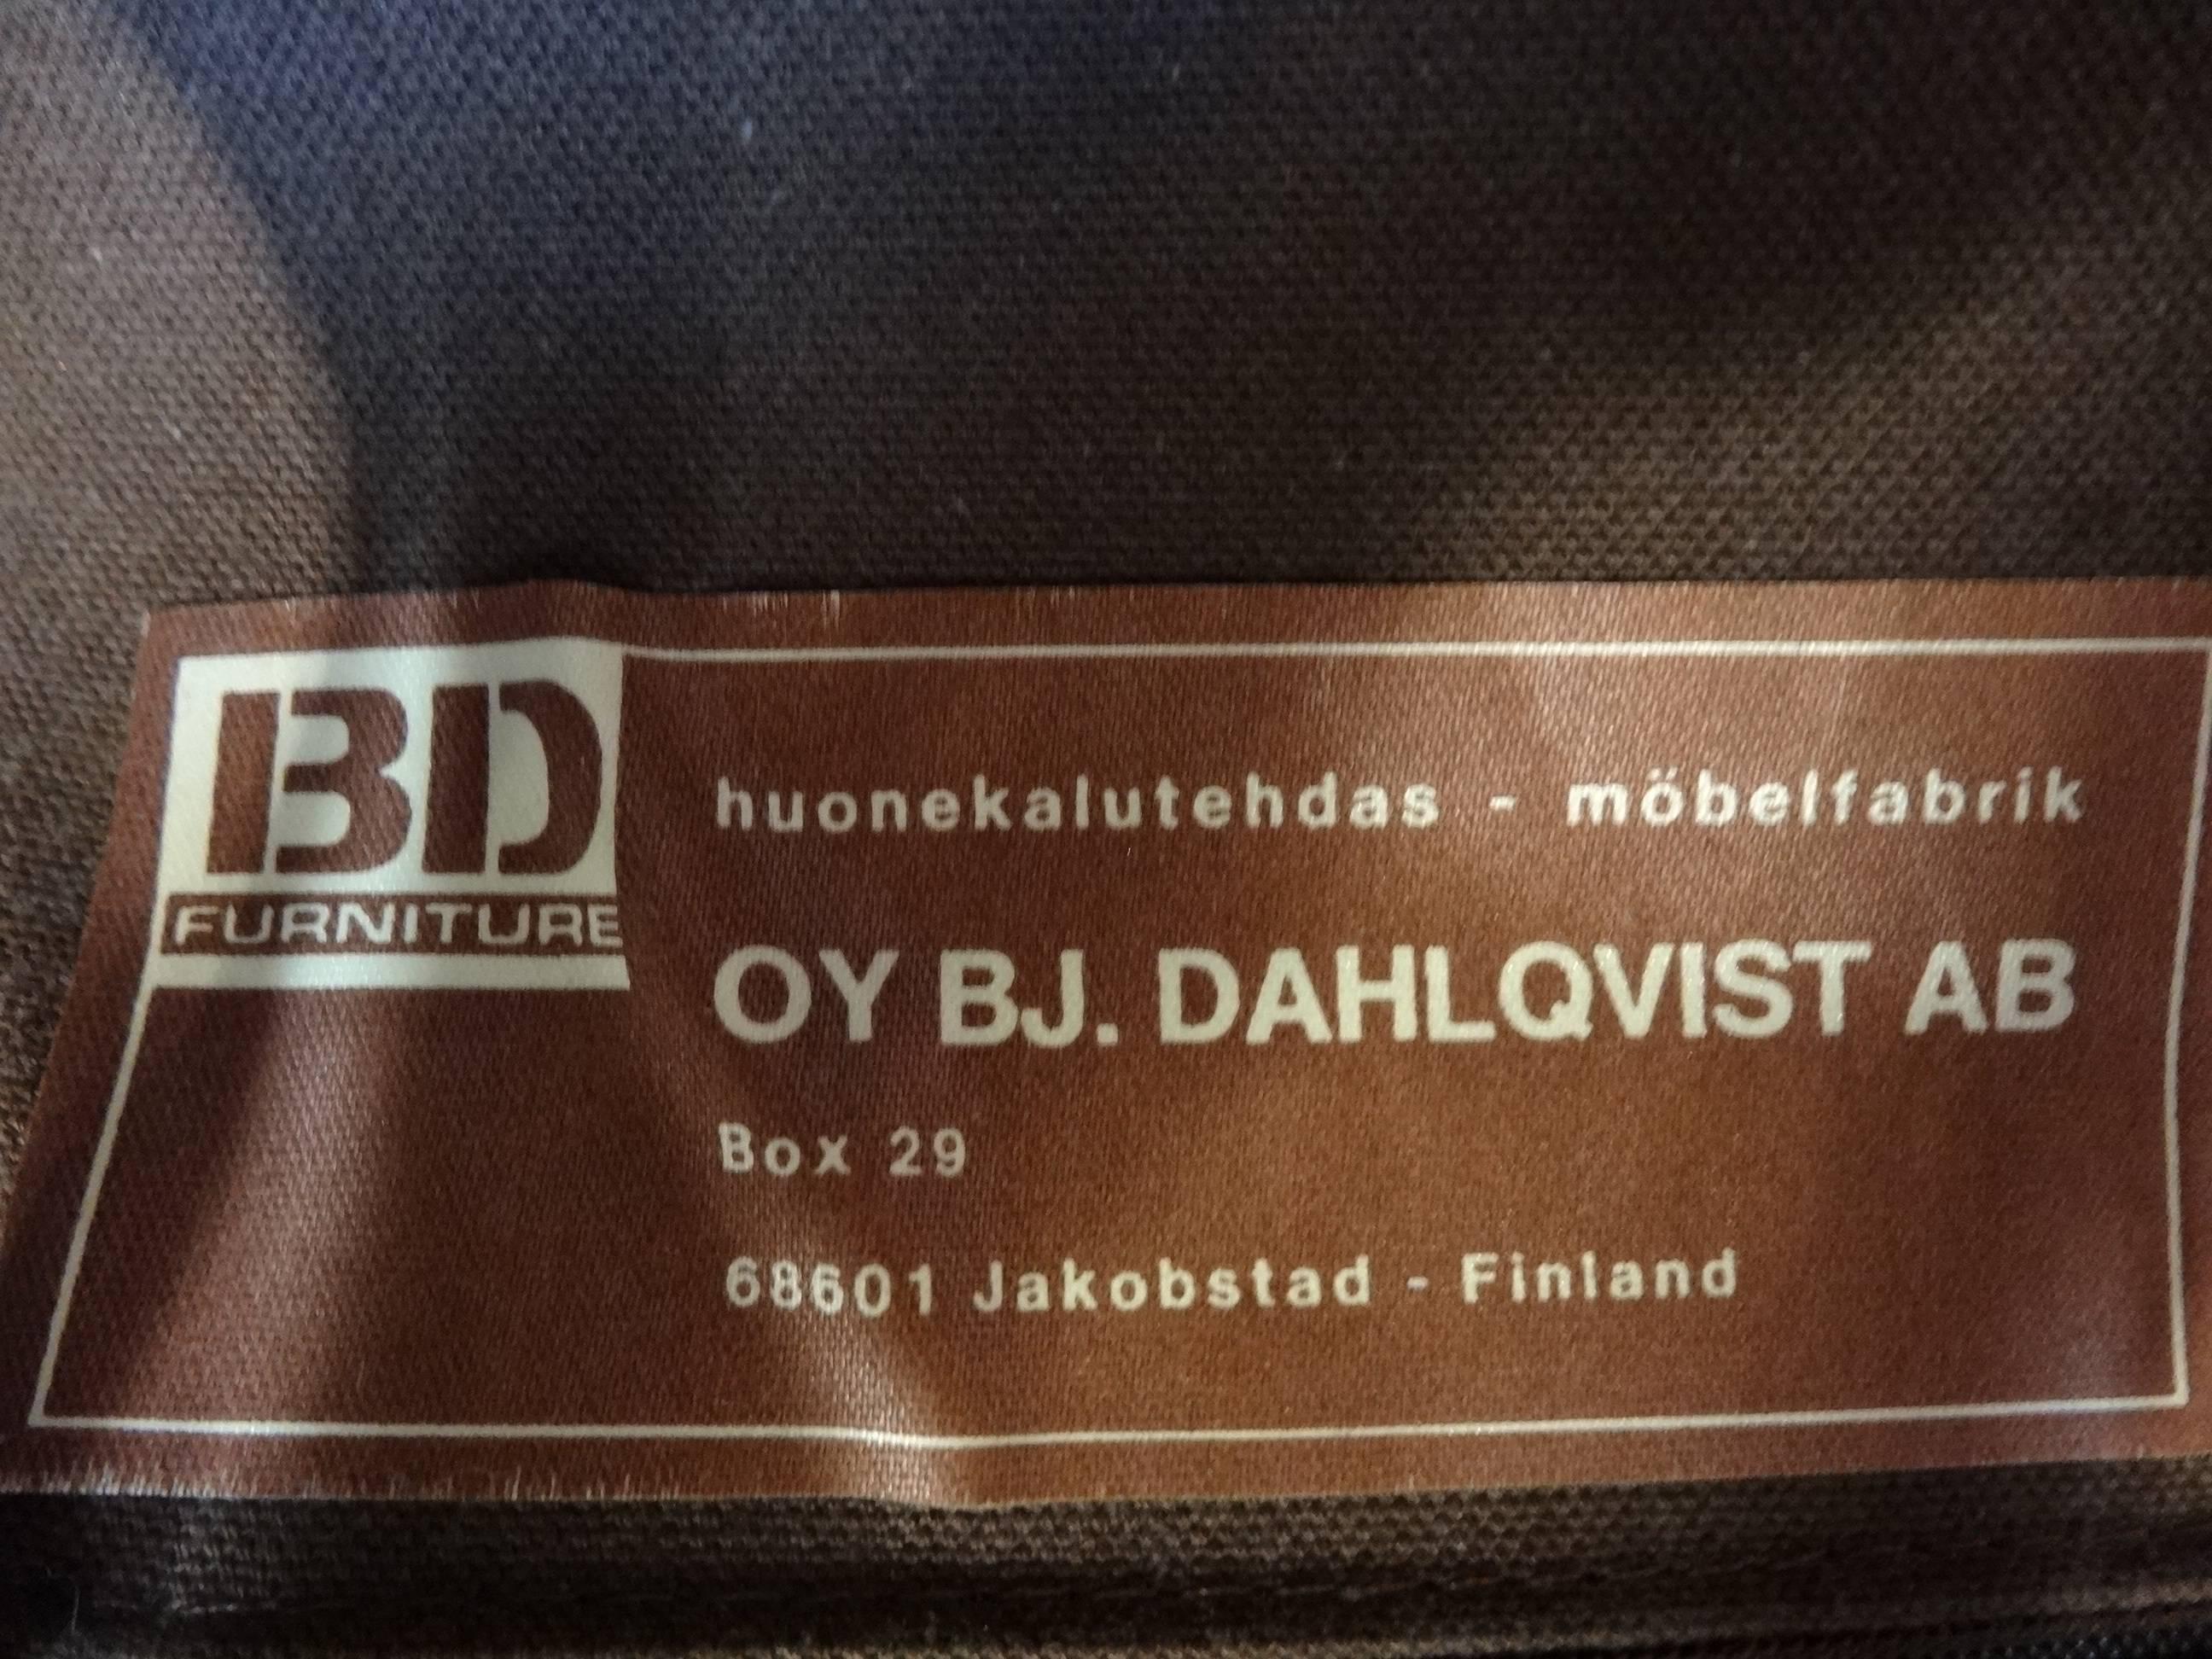 oy bj dahlqvist